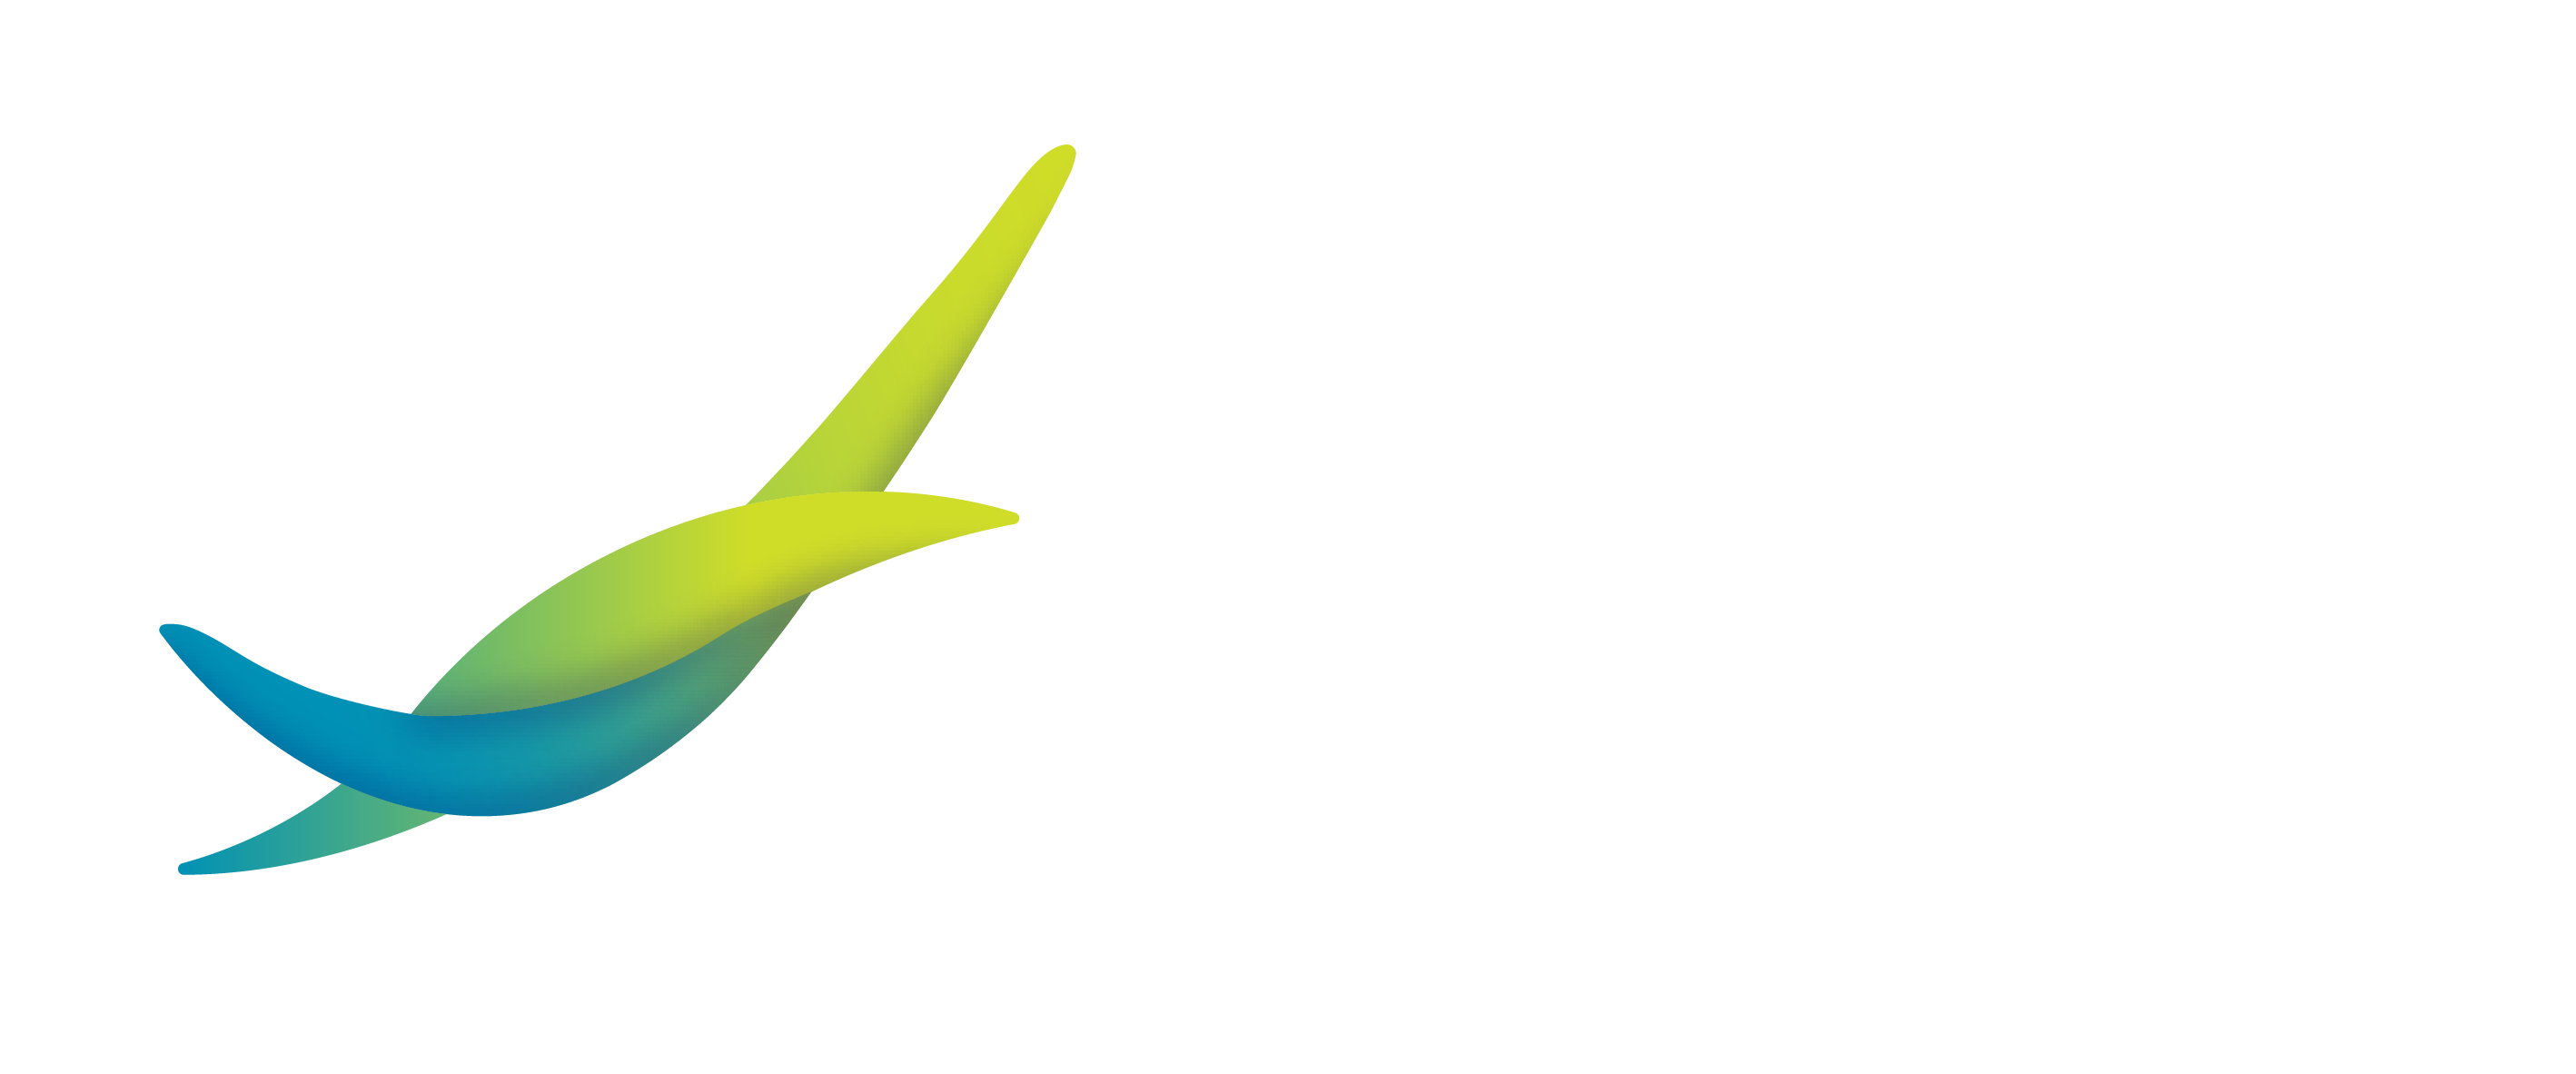 Rotterdam the Hague Innovation Airport